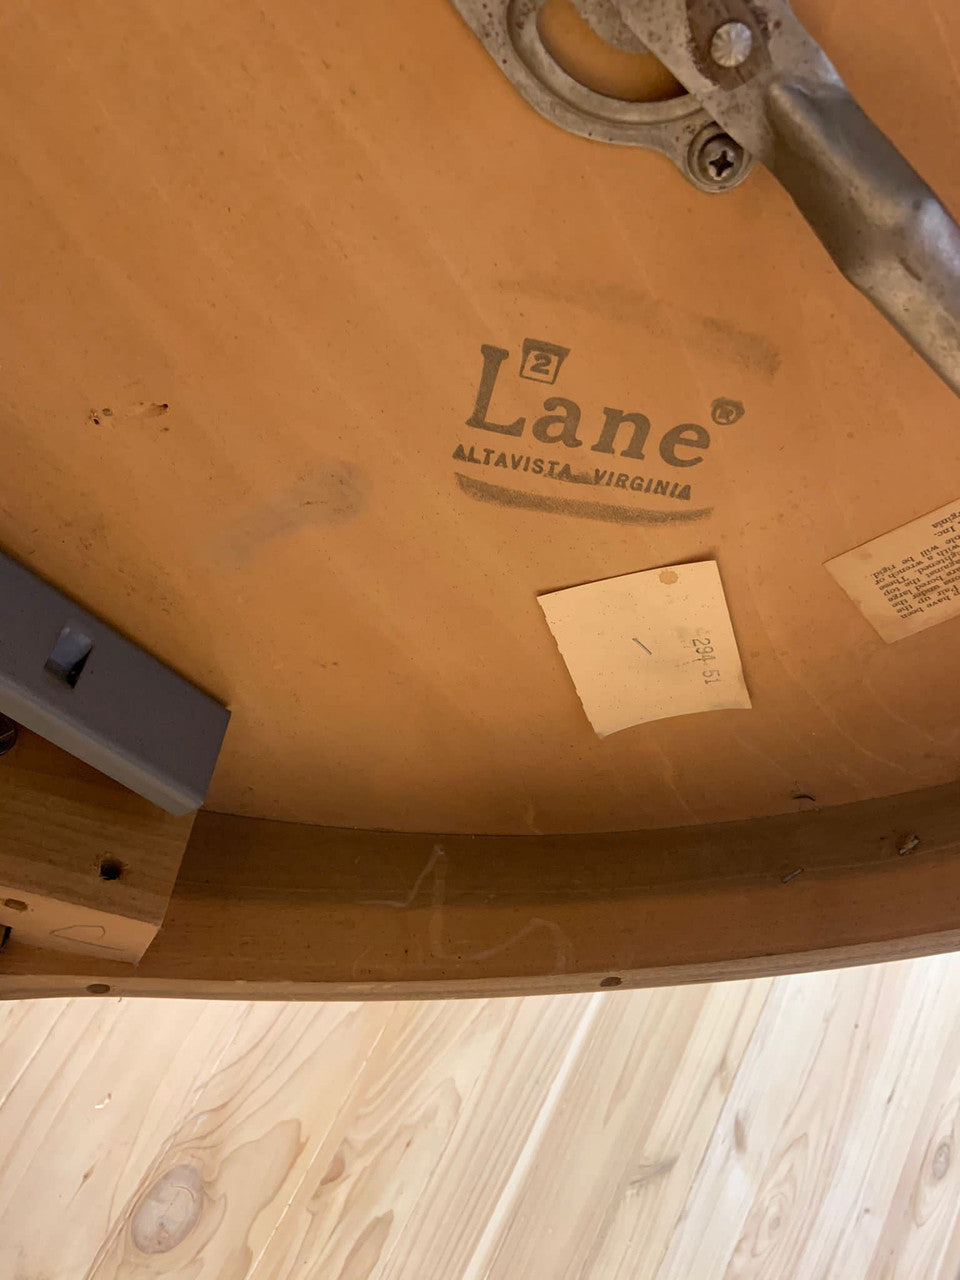 Mid Century Modern Arne Vodder for Lane Furniture Walnut High Back Dining Chairs - Set of 4